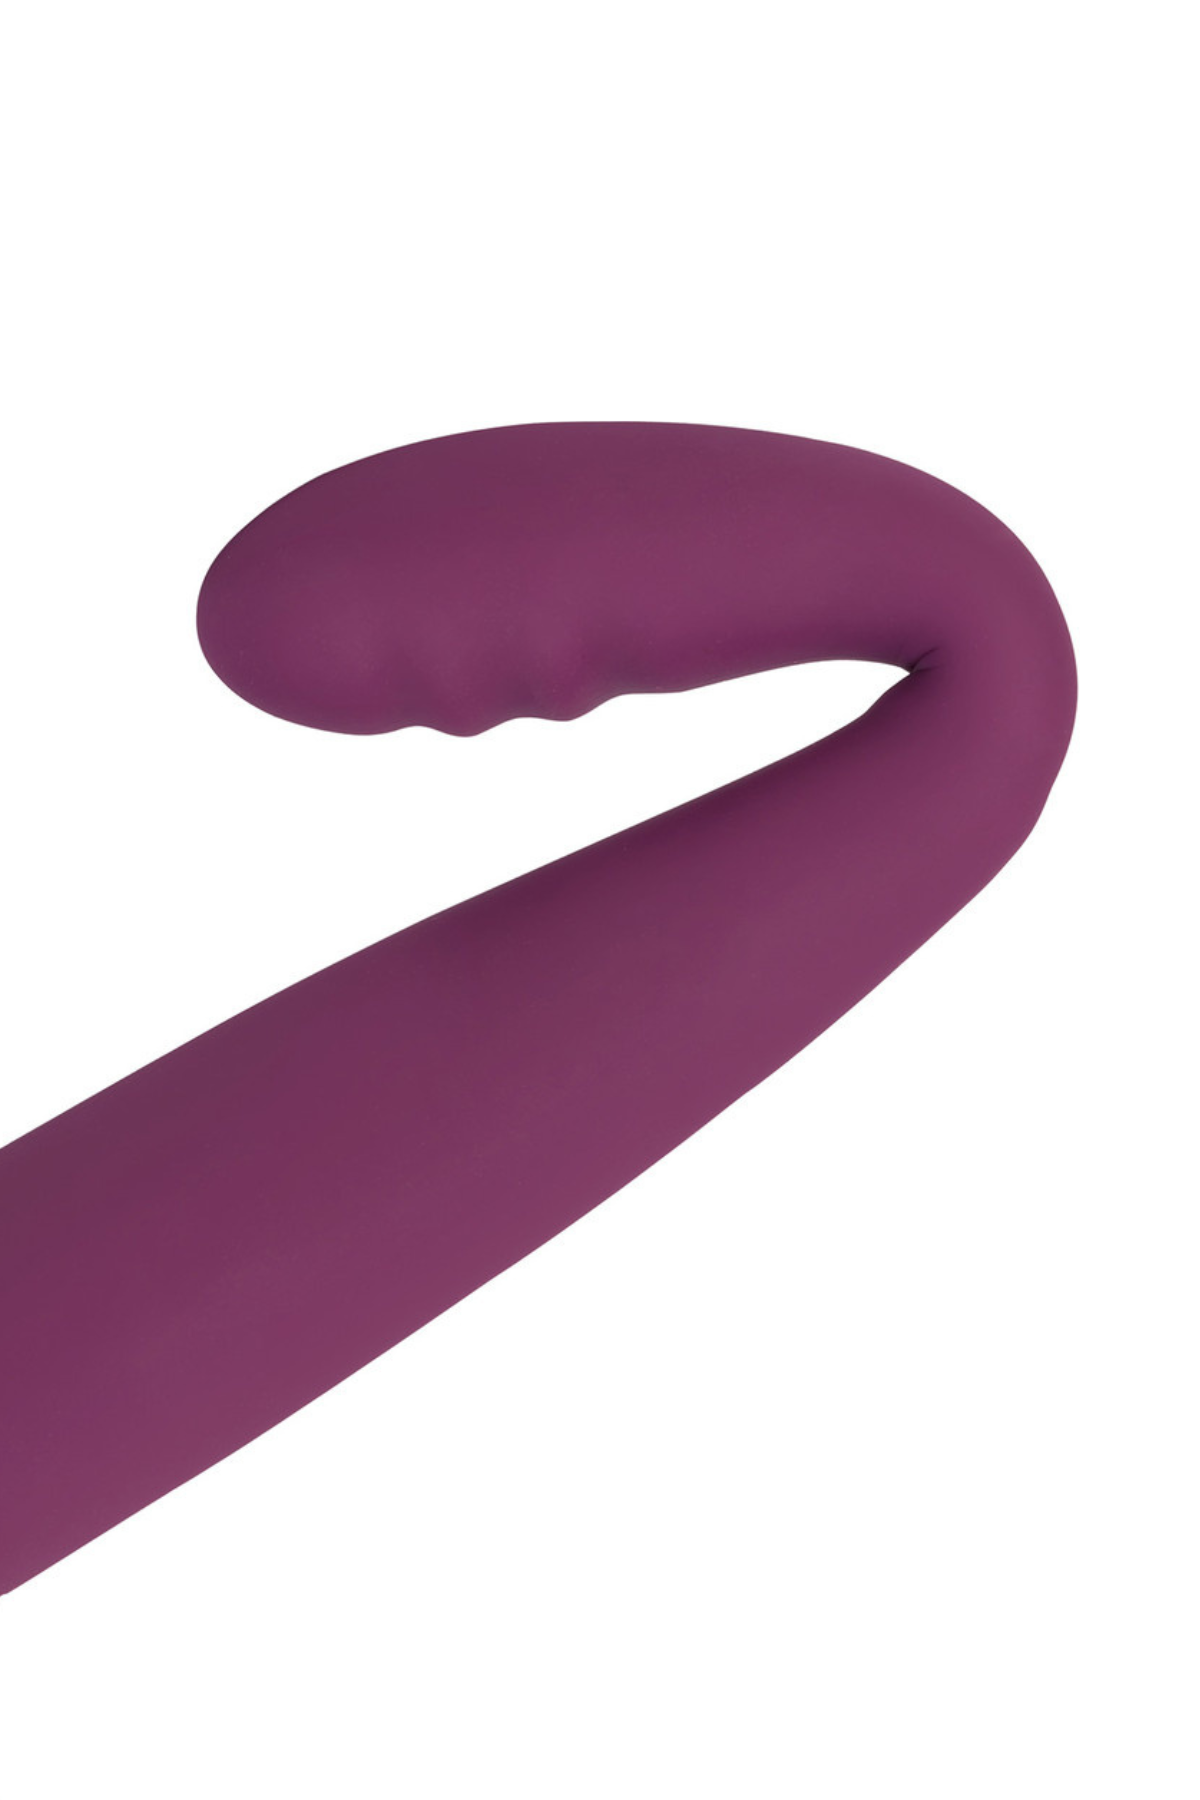 Cici | Flexible G-Spot Vibrator